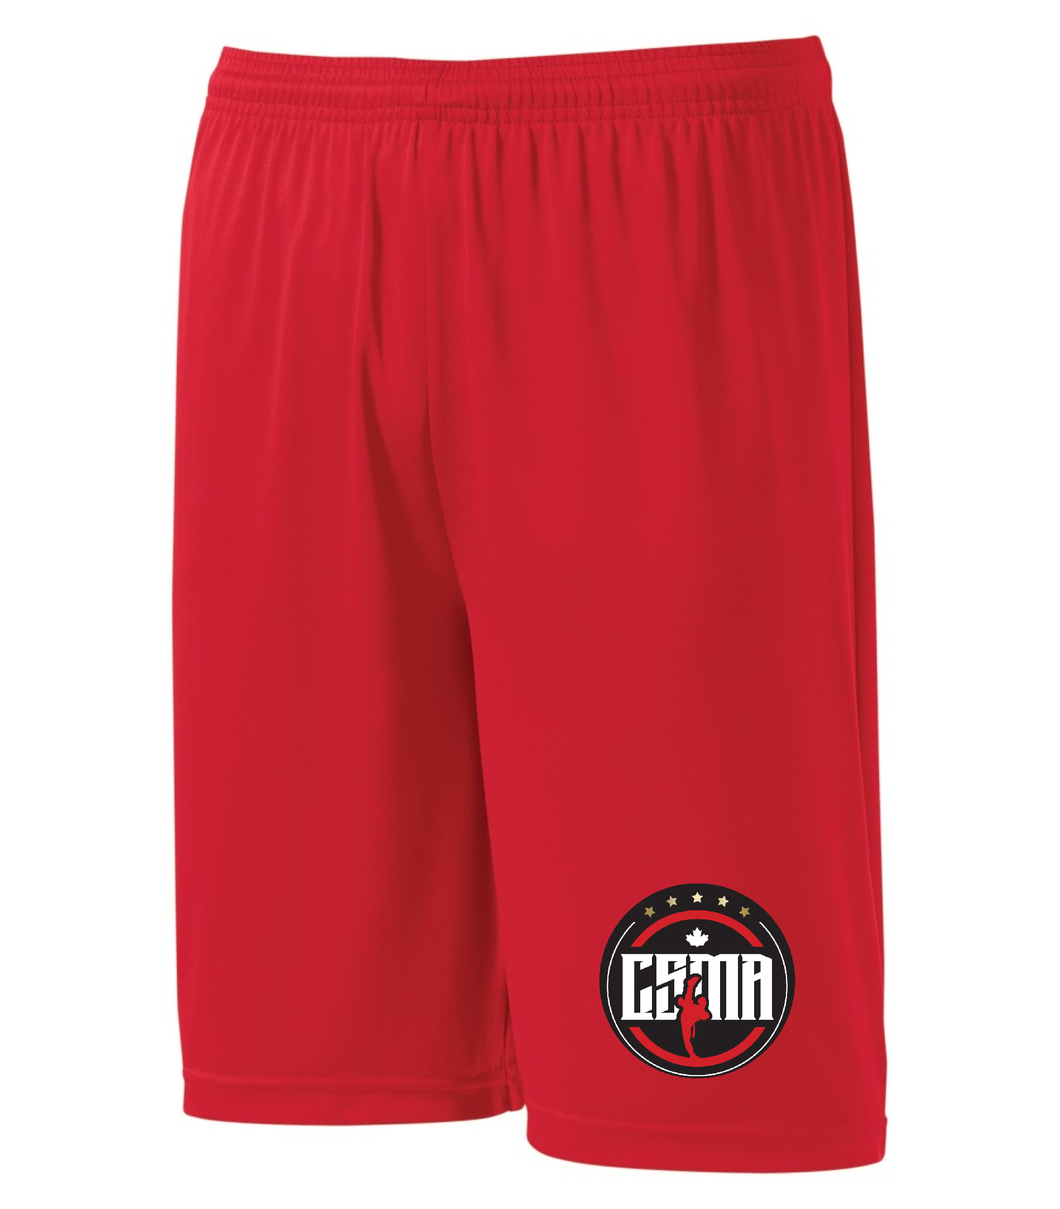 Red Adult Shorts - CSMA